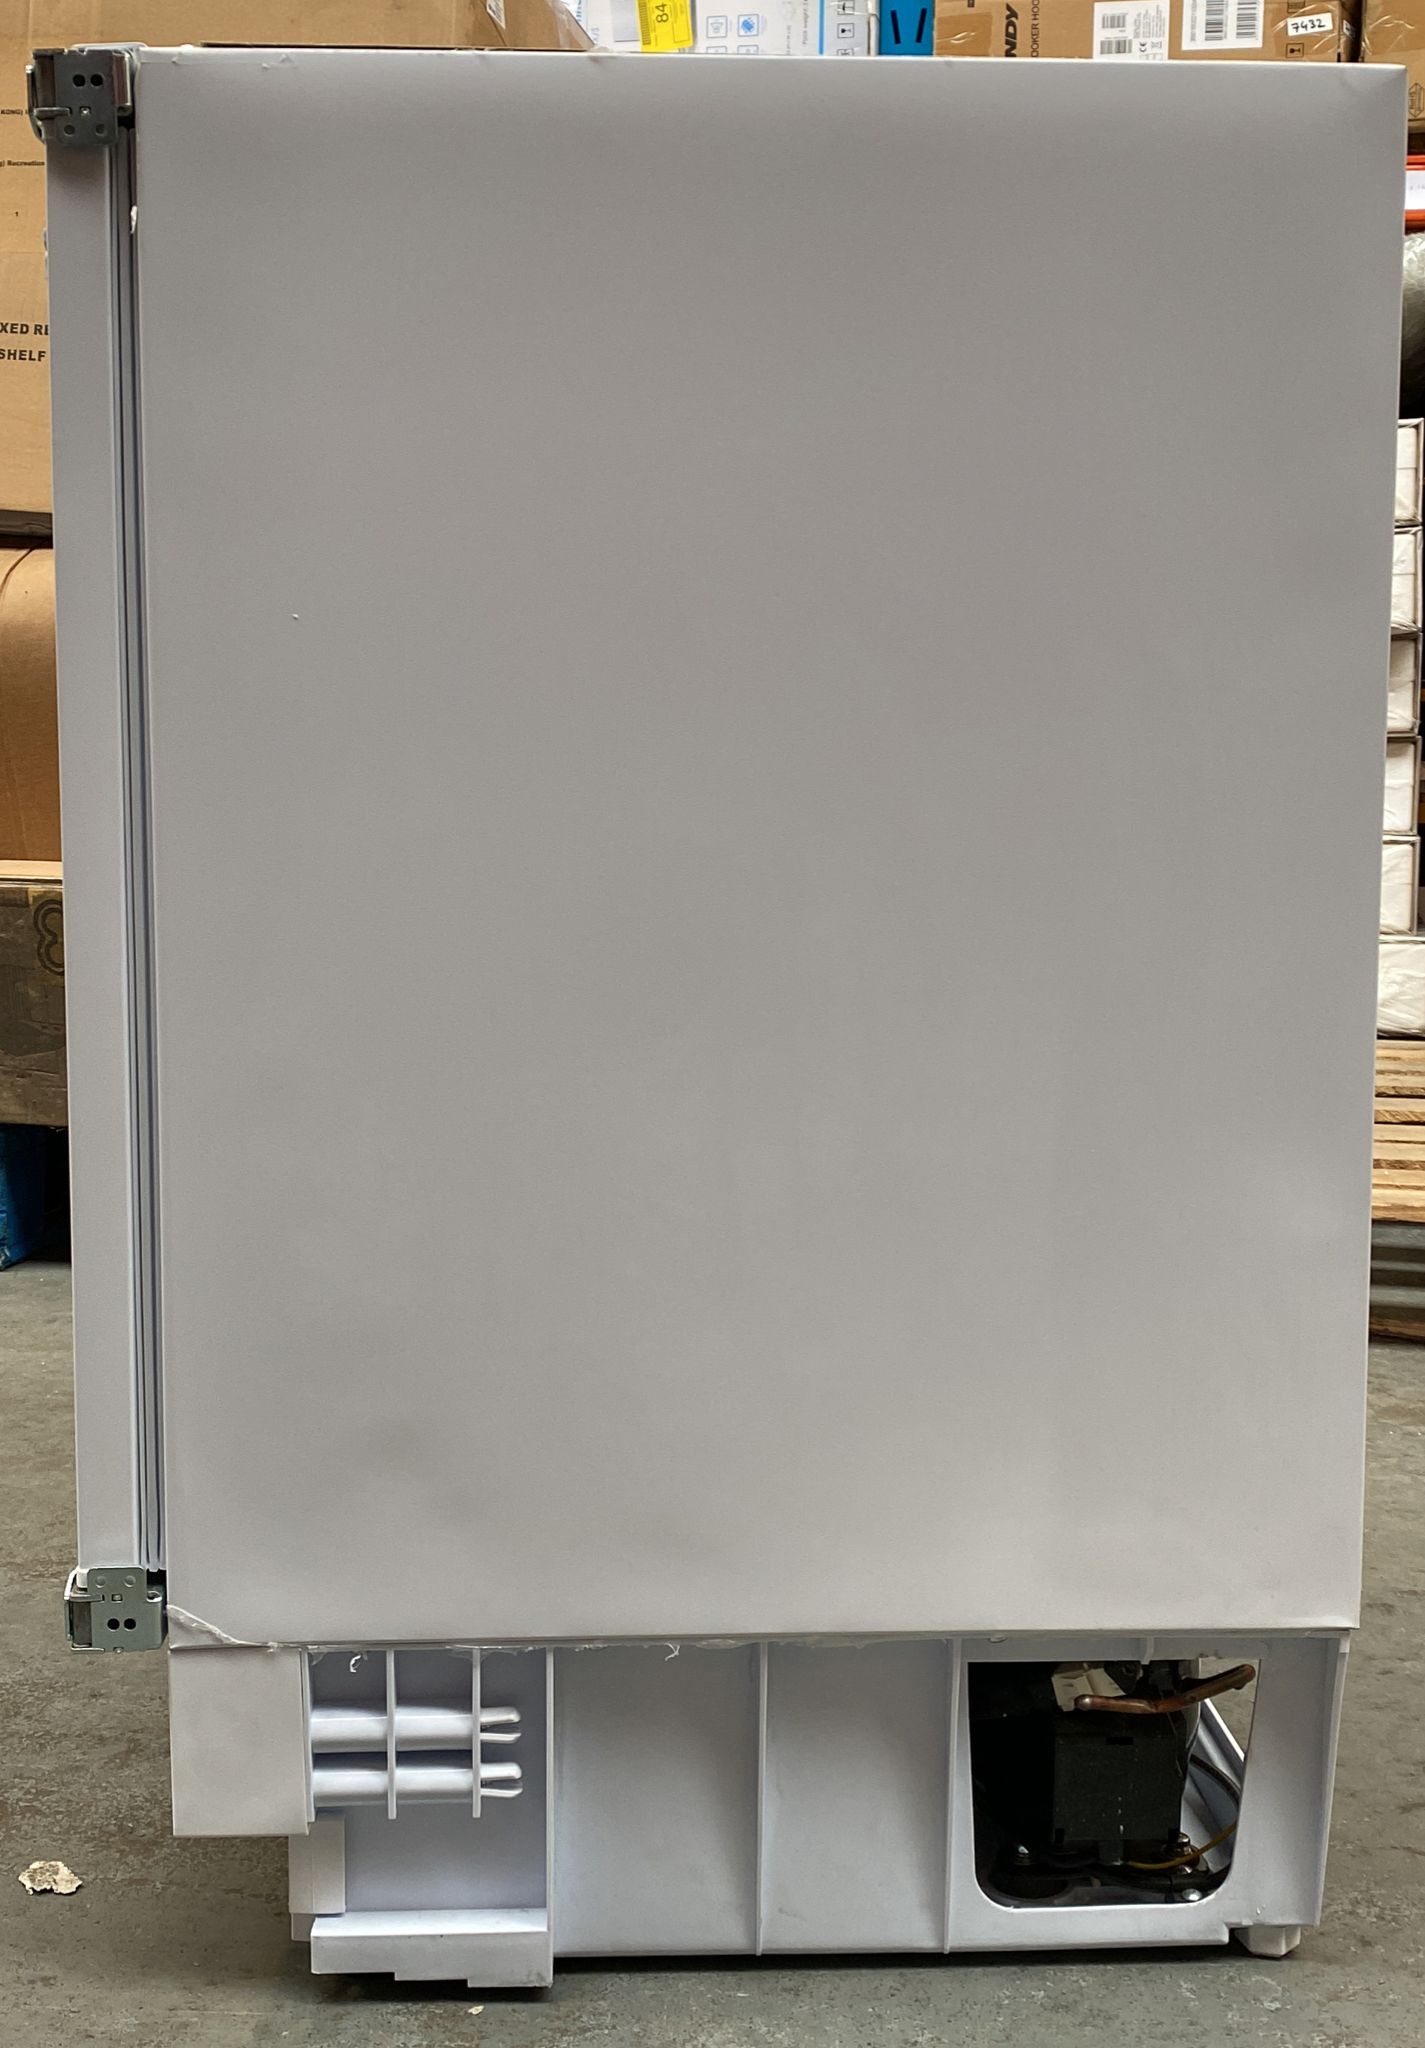 BUFZUK White Integrated Under Counter Freezer 7362